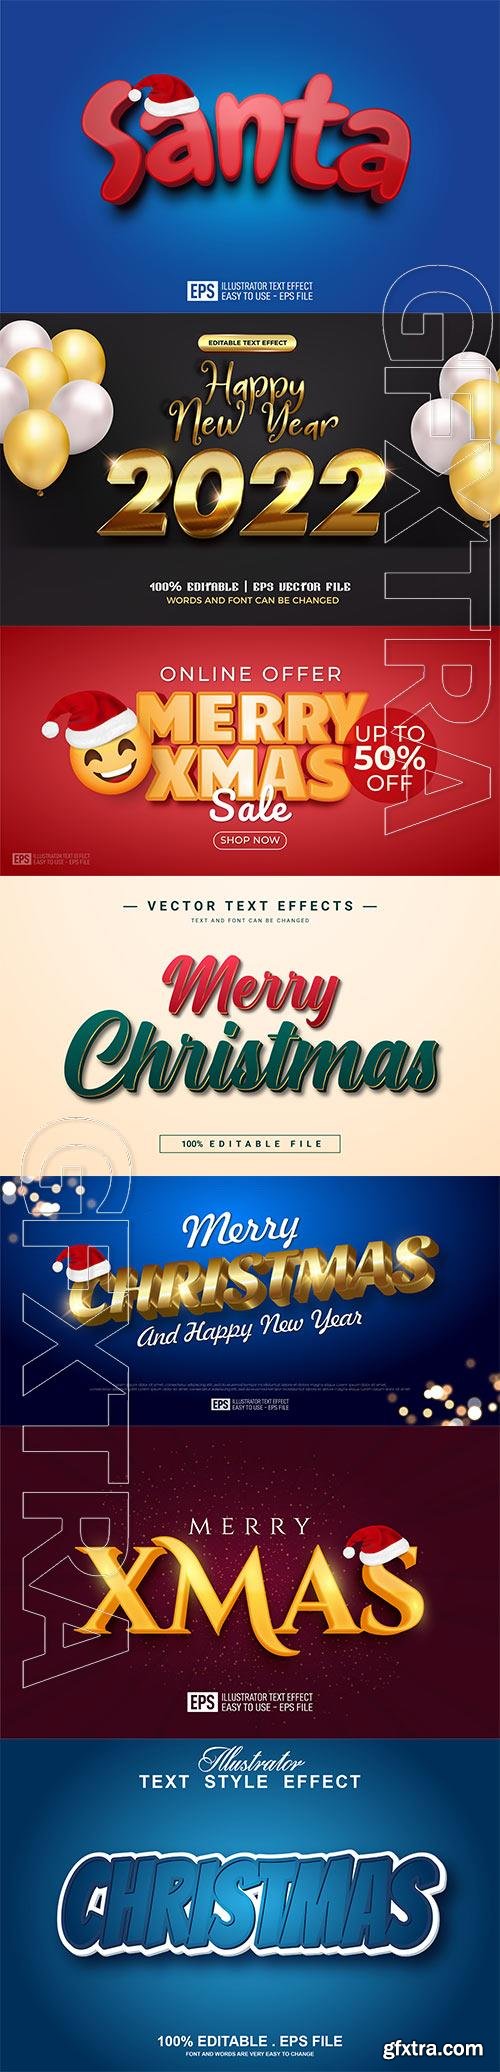 2022 New year, Merry christmas editable text effect premium vector vol 17